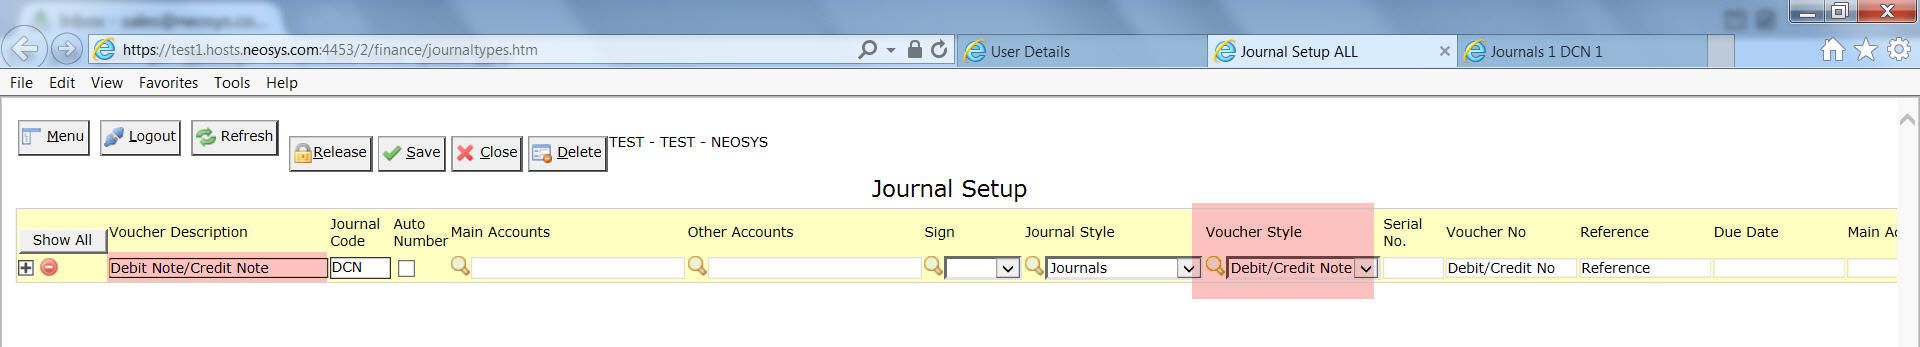 Journal setup.jpg